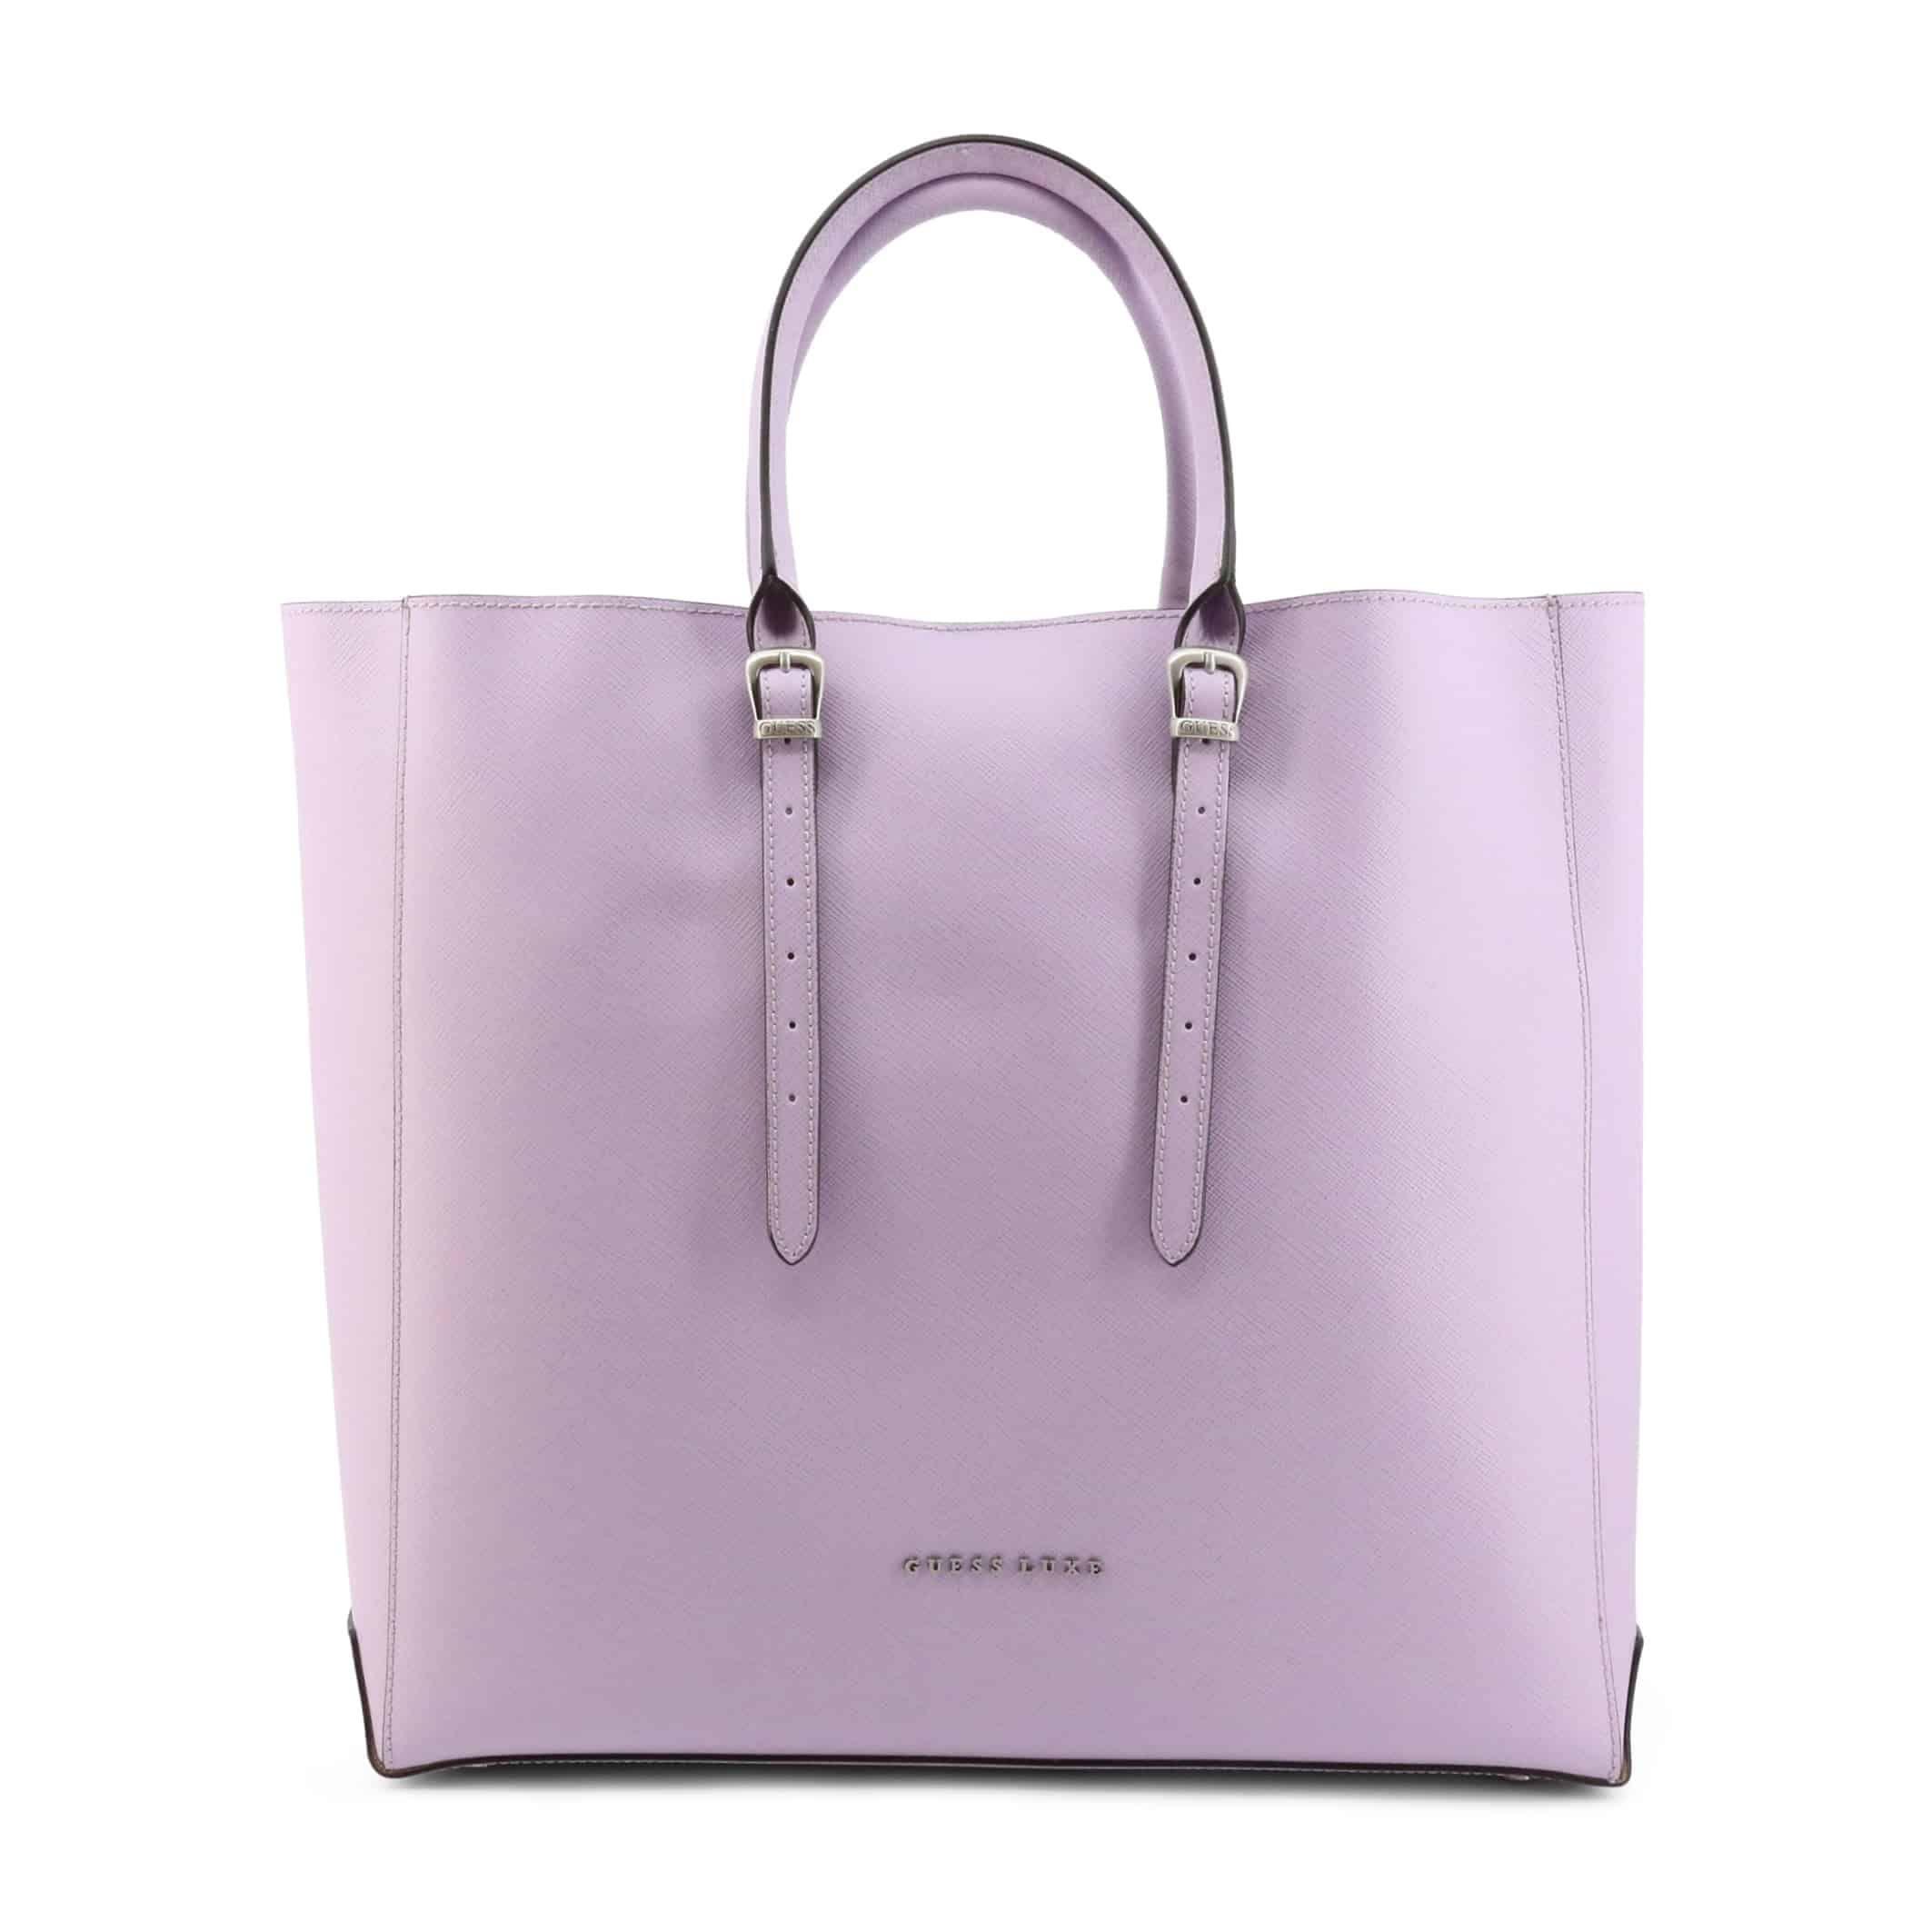 Guess Metallic Logo Shopping Bags in Violet (Purple) - Save 25% | Lyst UK